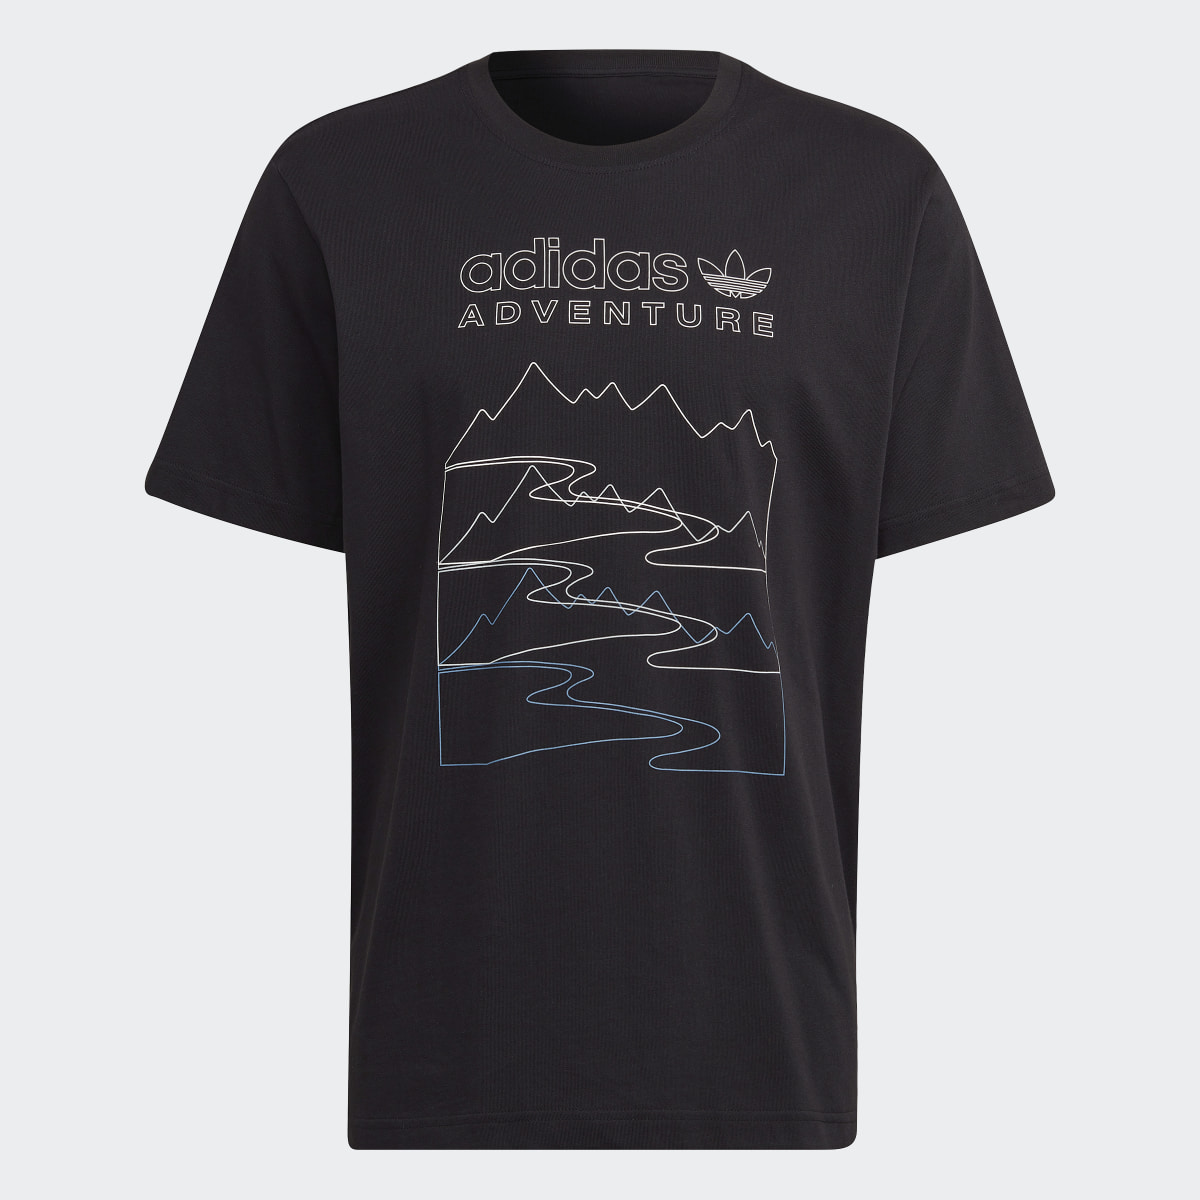 Adidas T-shirt Mountain adidas Adventure. 5